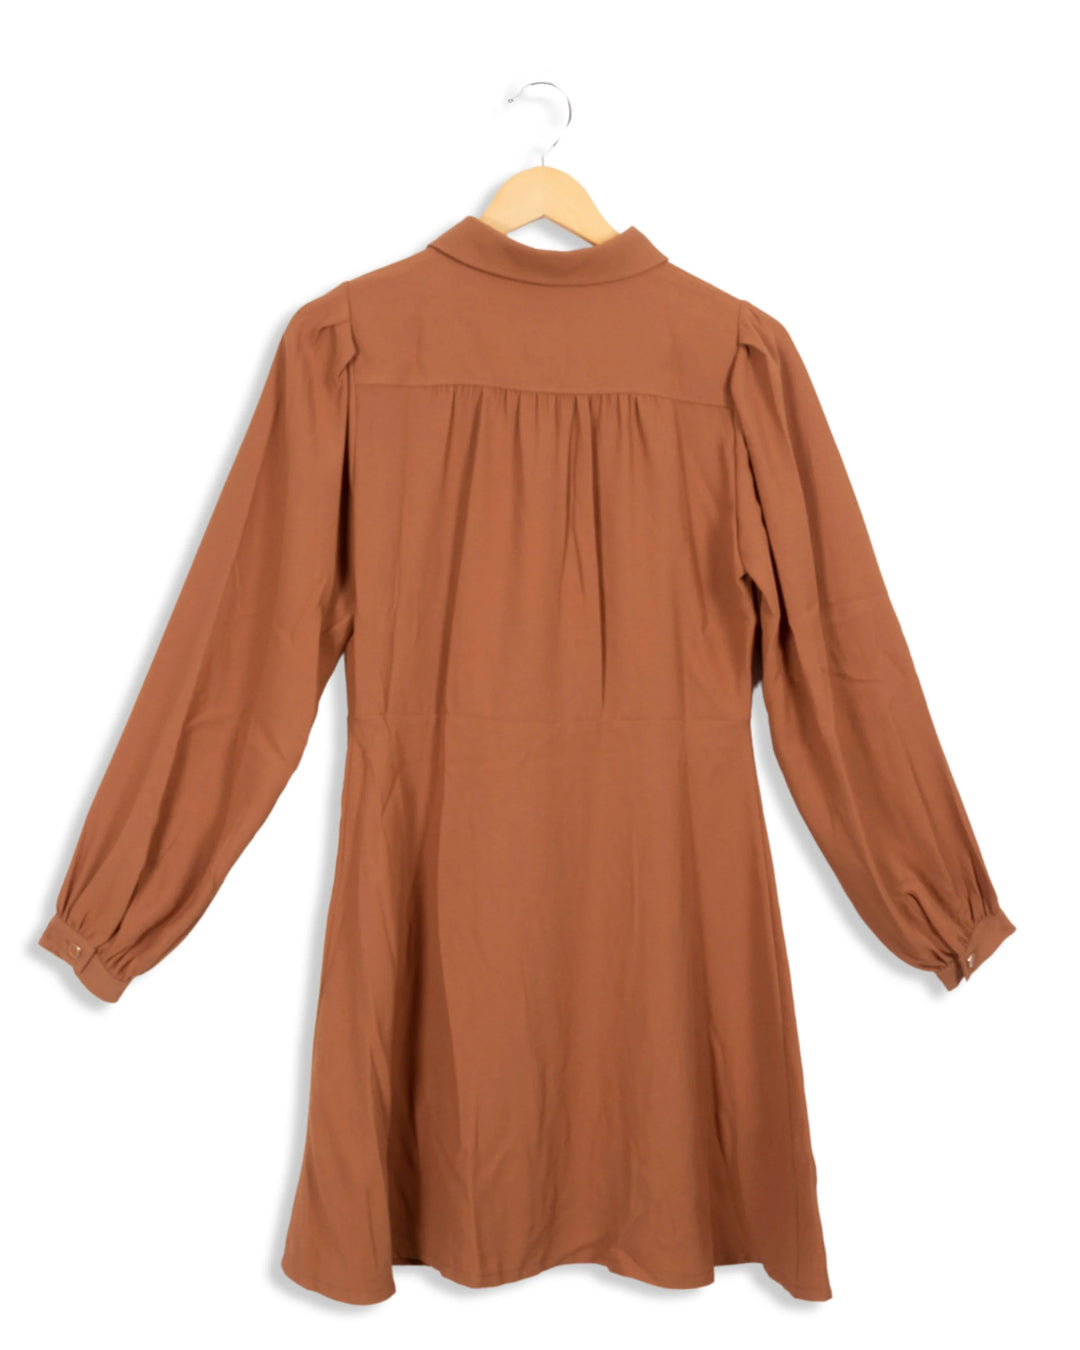 Camel dress - Petite Mendigote - S